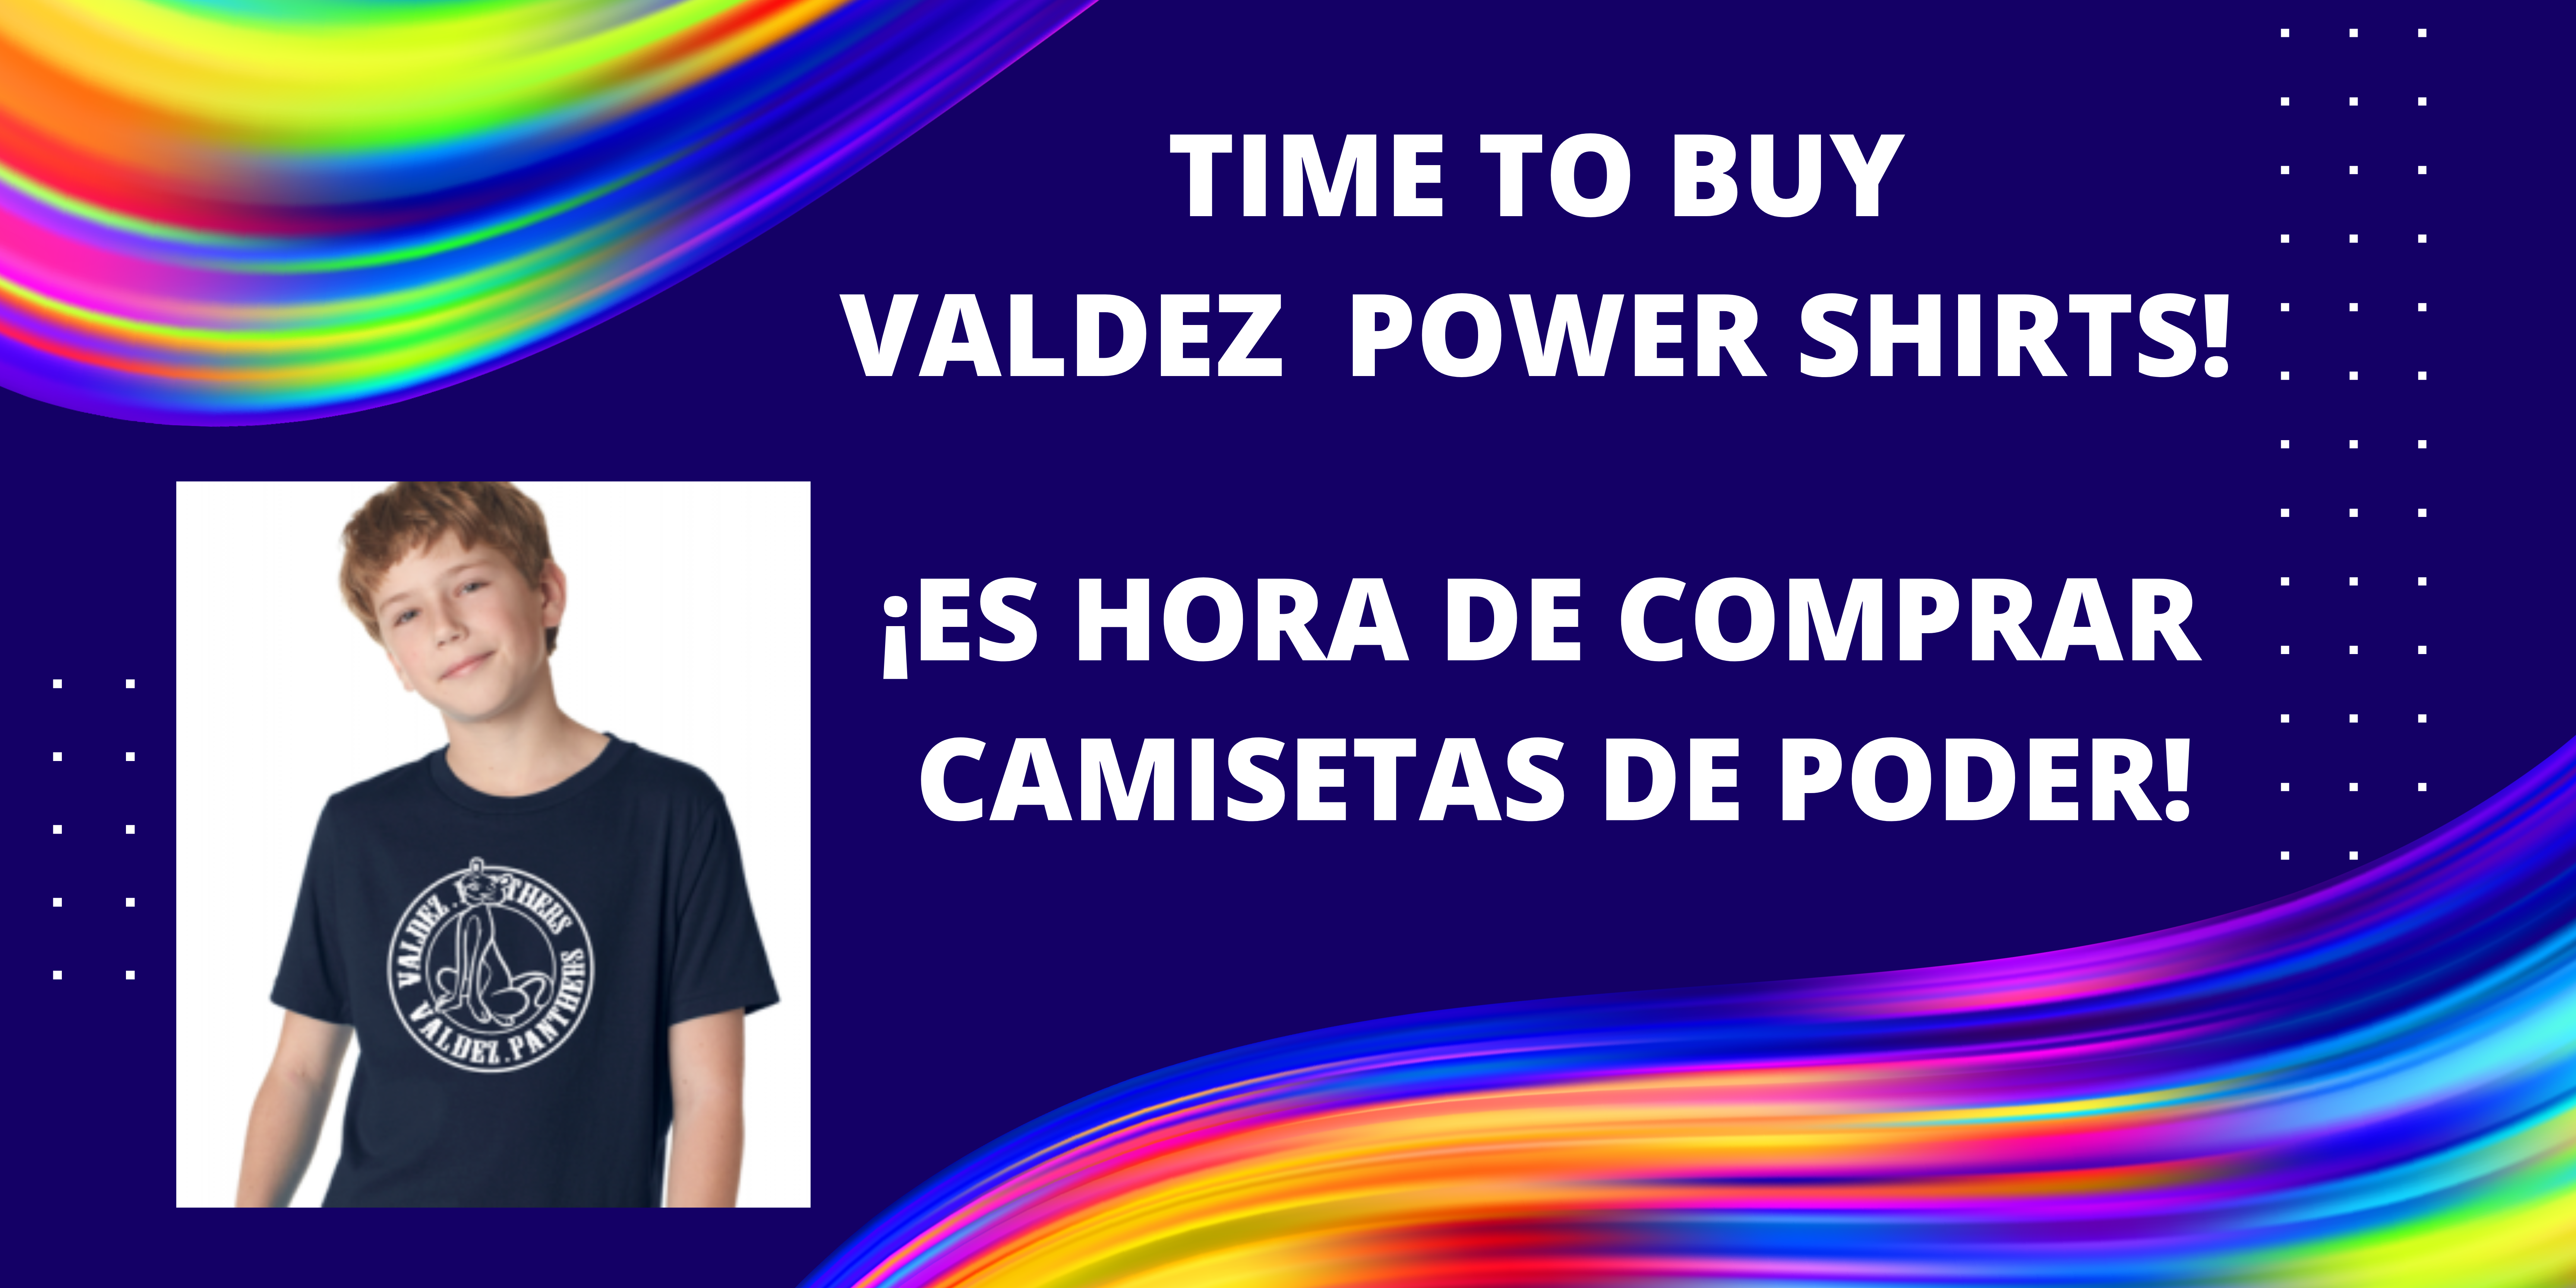 Image of boy wearing a Valdez t-shirt on a blue background with white text: "Time to buy Valdez t-shirts!" and "Es hora de comprar camisetas de PODER!""